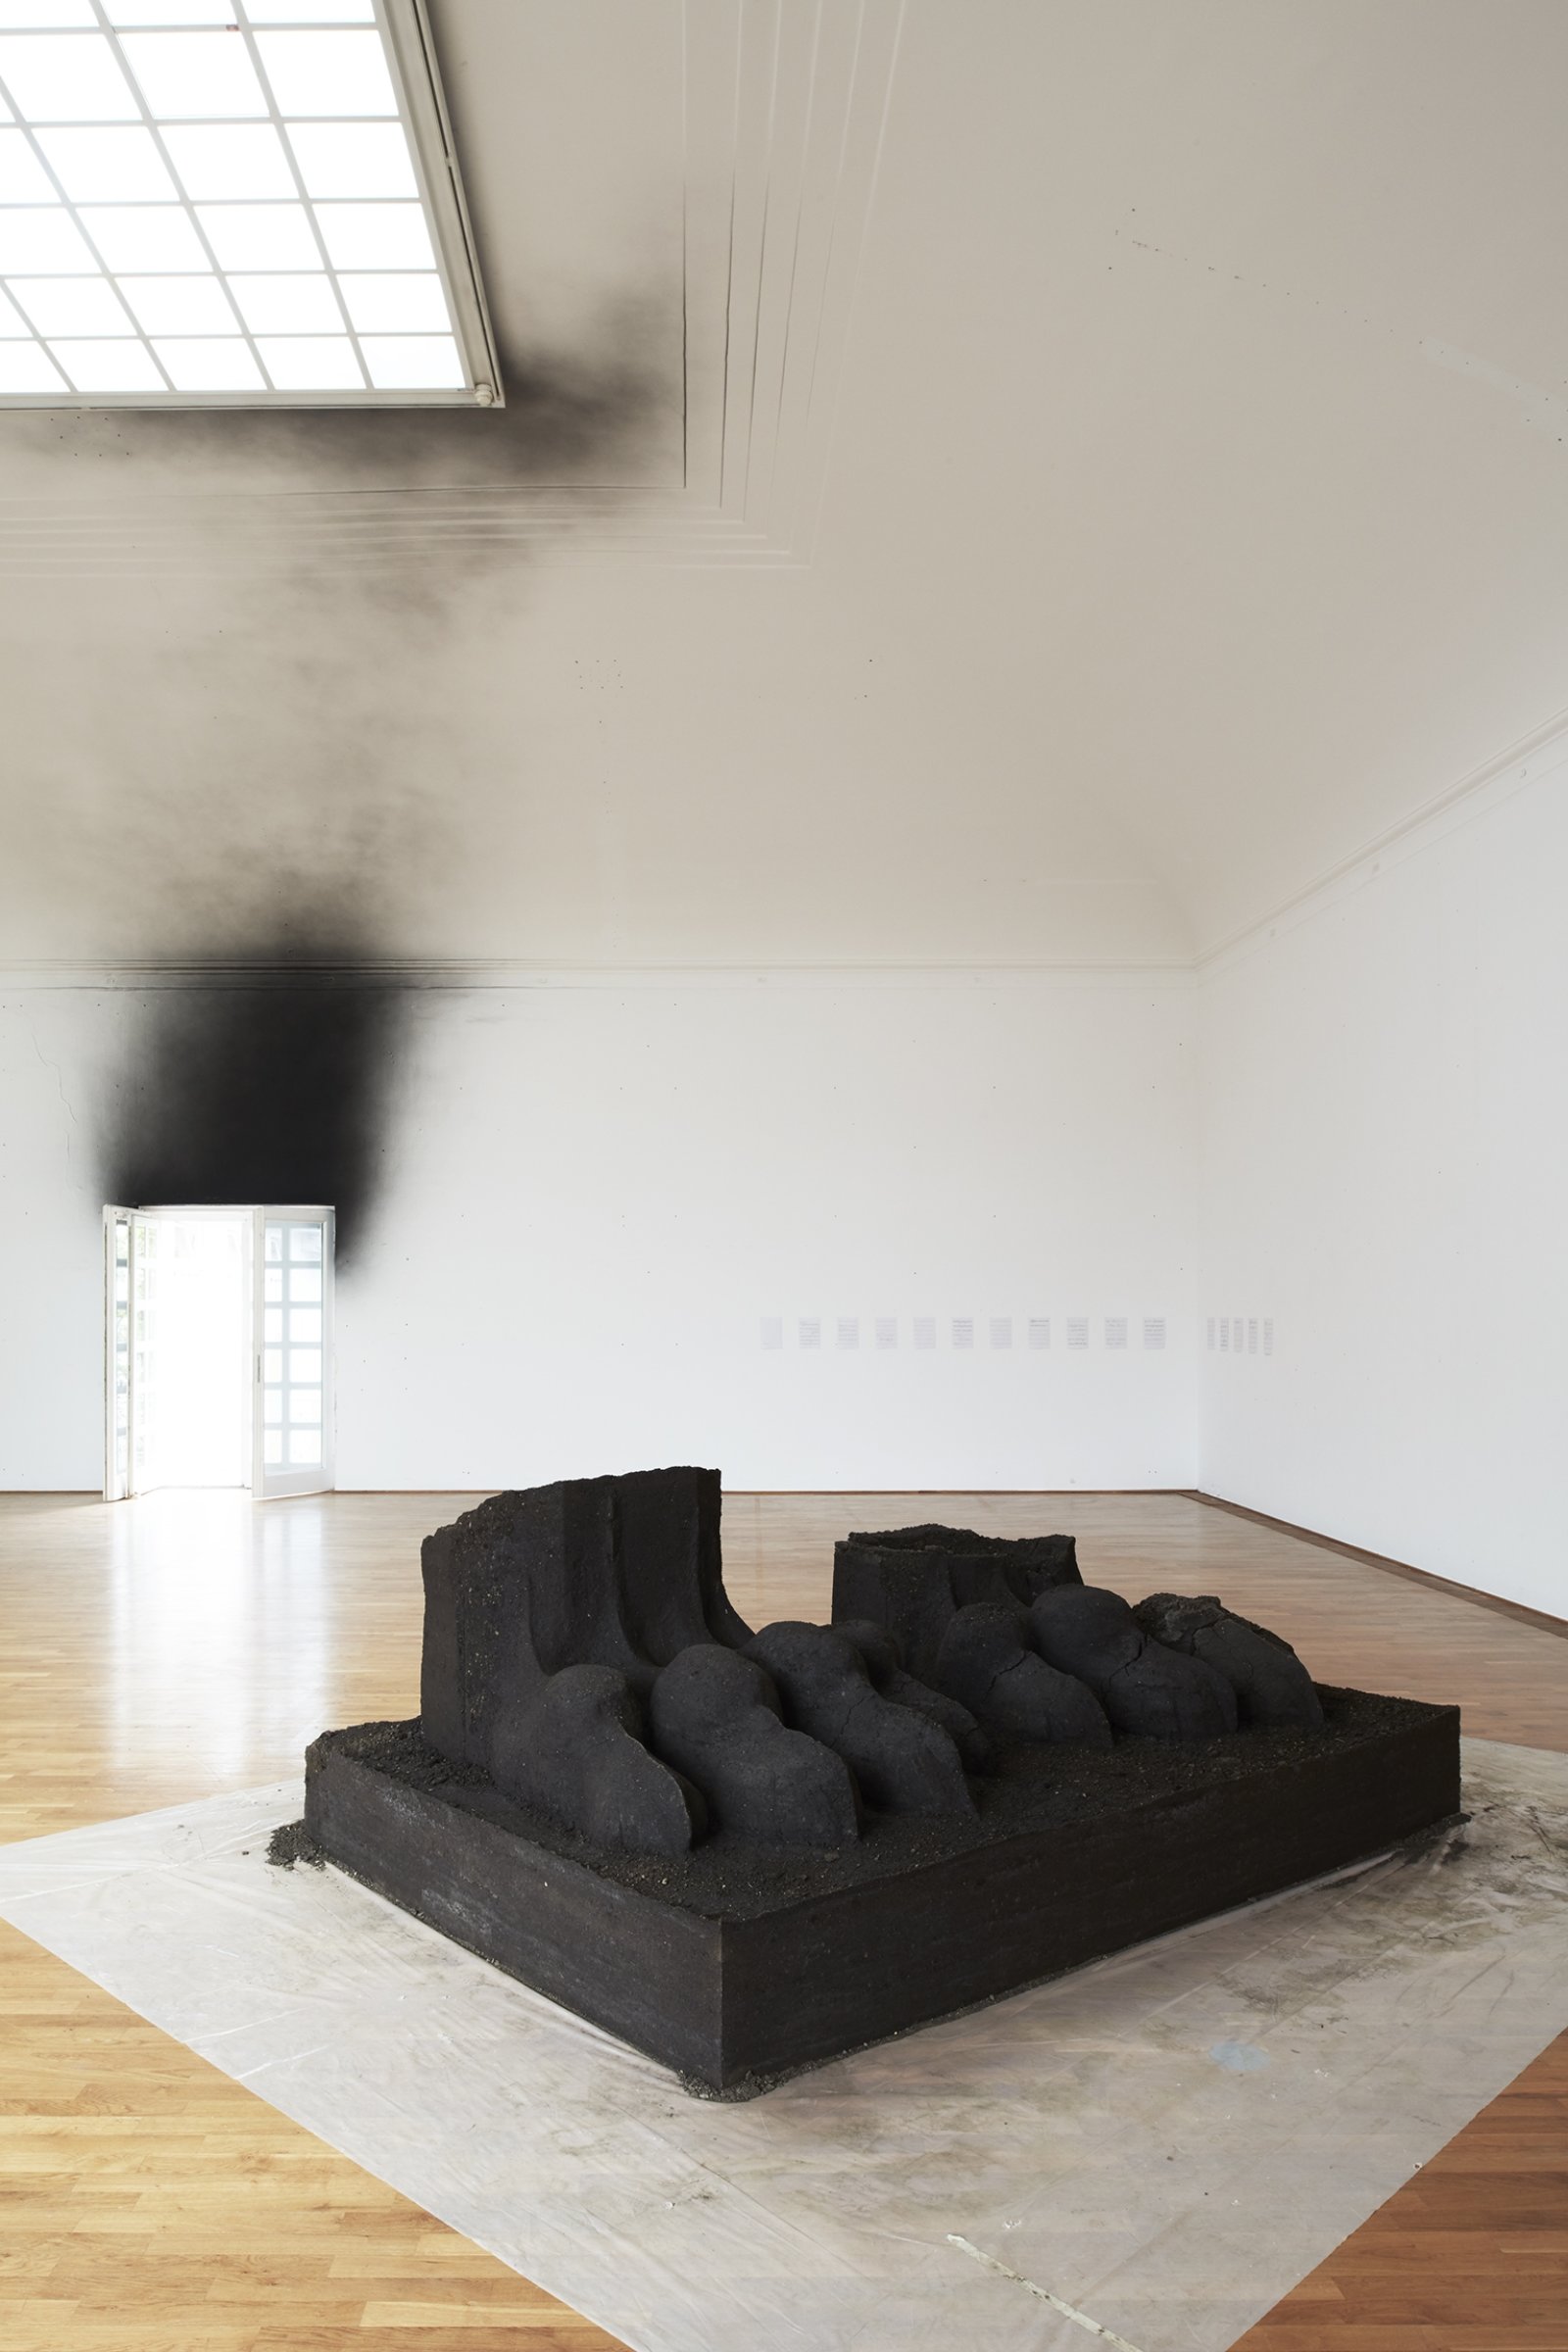 Abbas Akhavan, Variations on Ghost, 2017, soil, water, 47 x 126 x 87 in. (120 x 320 x 220 cm). Installation view, Museum Villa Stuck, Munich, Germany, 2017